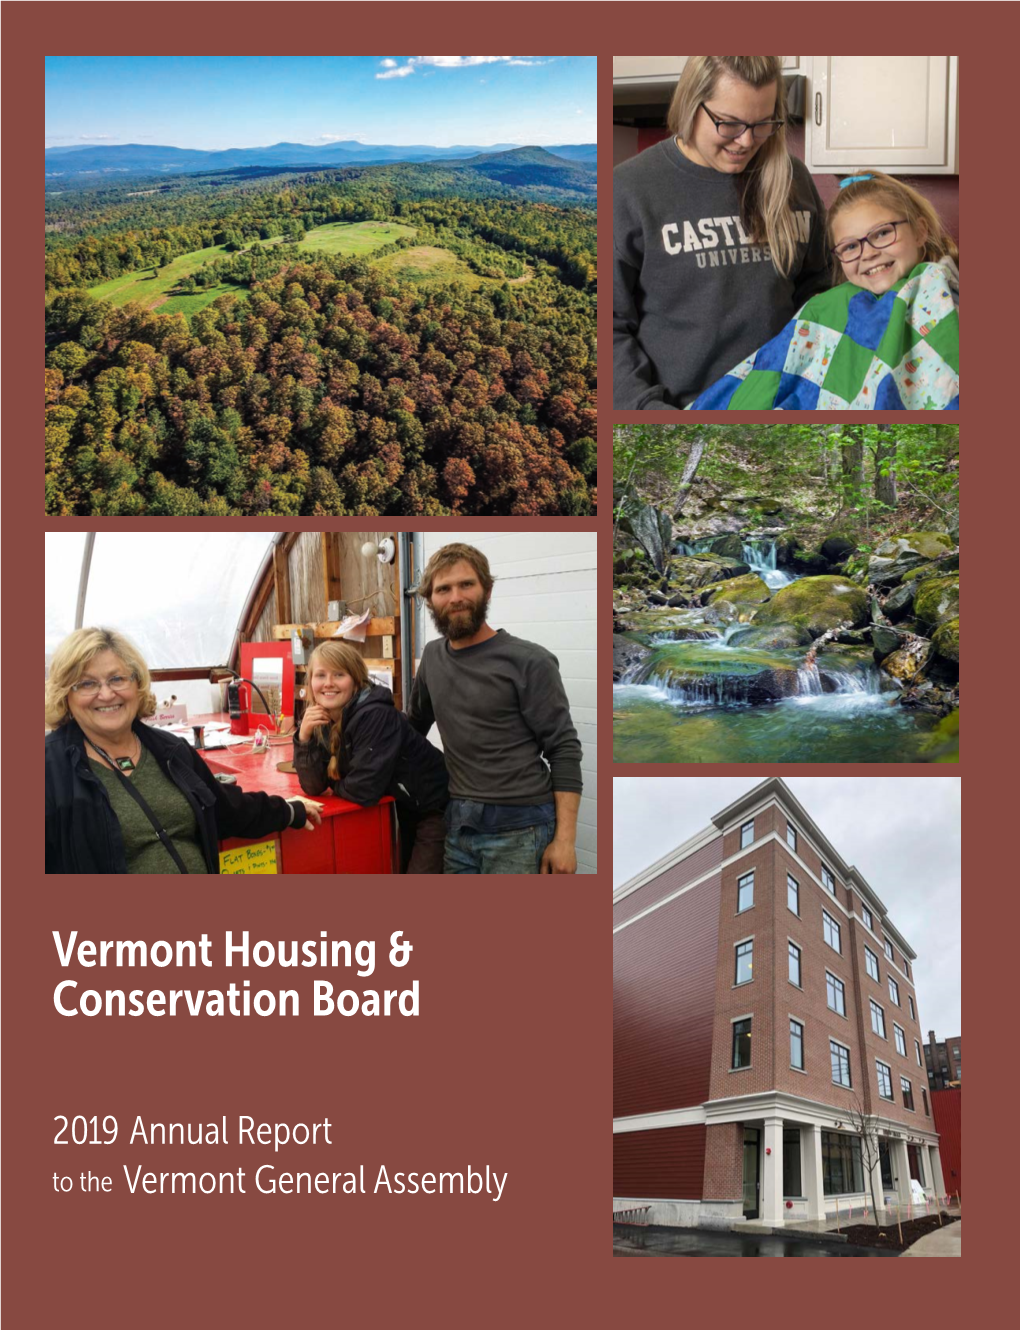 Vermont Housing & Conservation Board